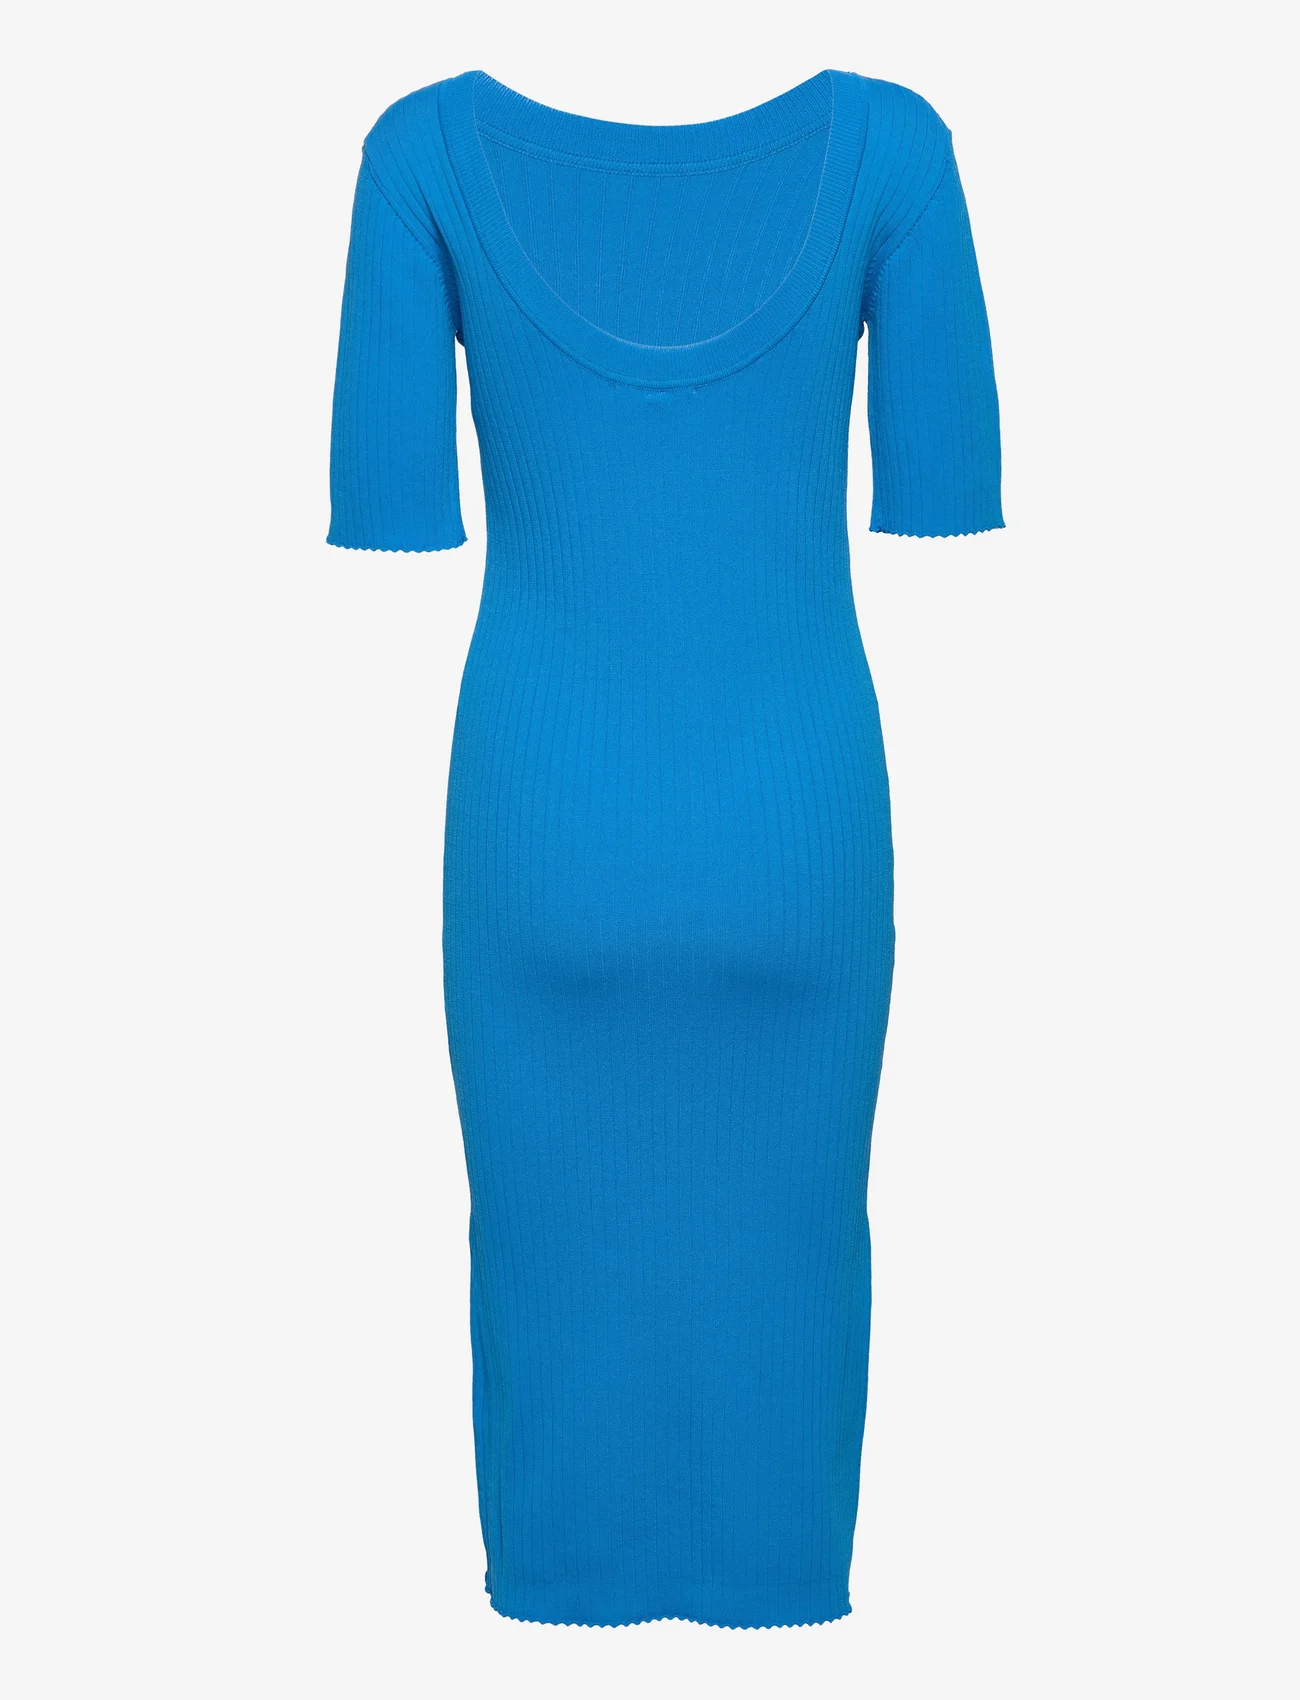 Just Female - Fresh dress - sukienki dopasowane - malibu blue - 1